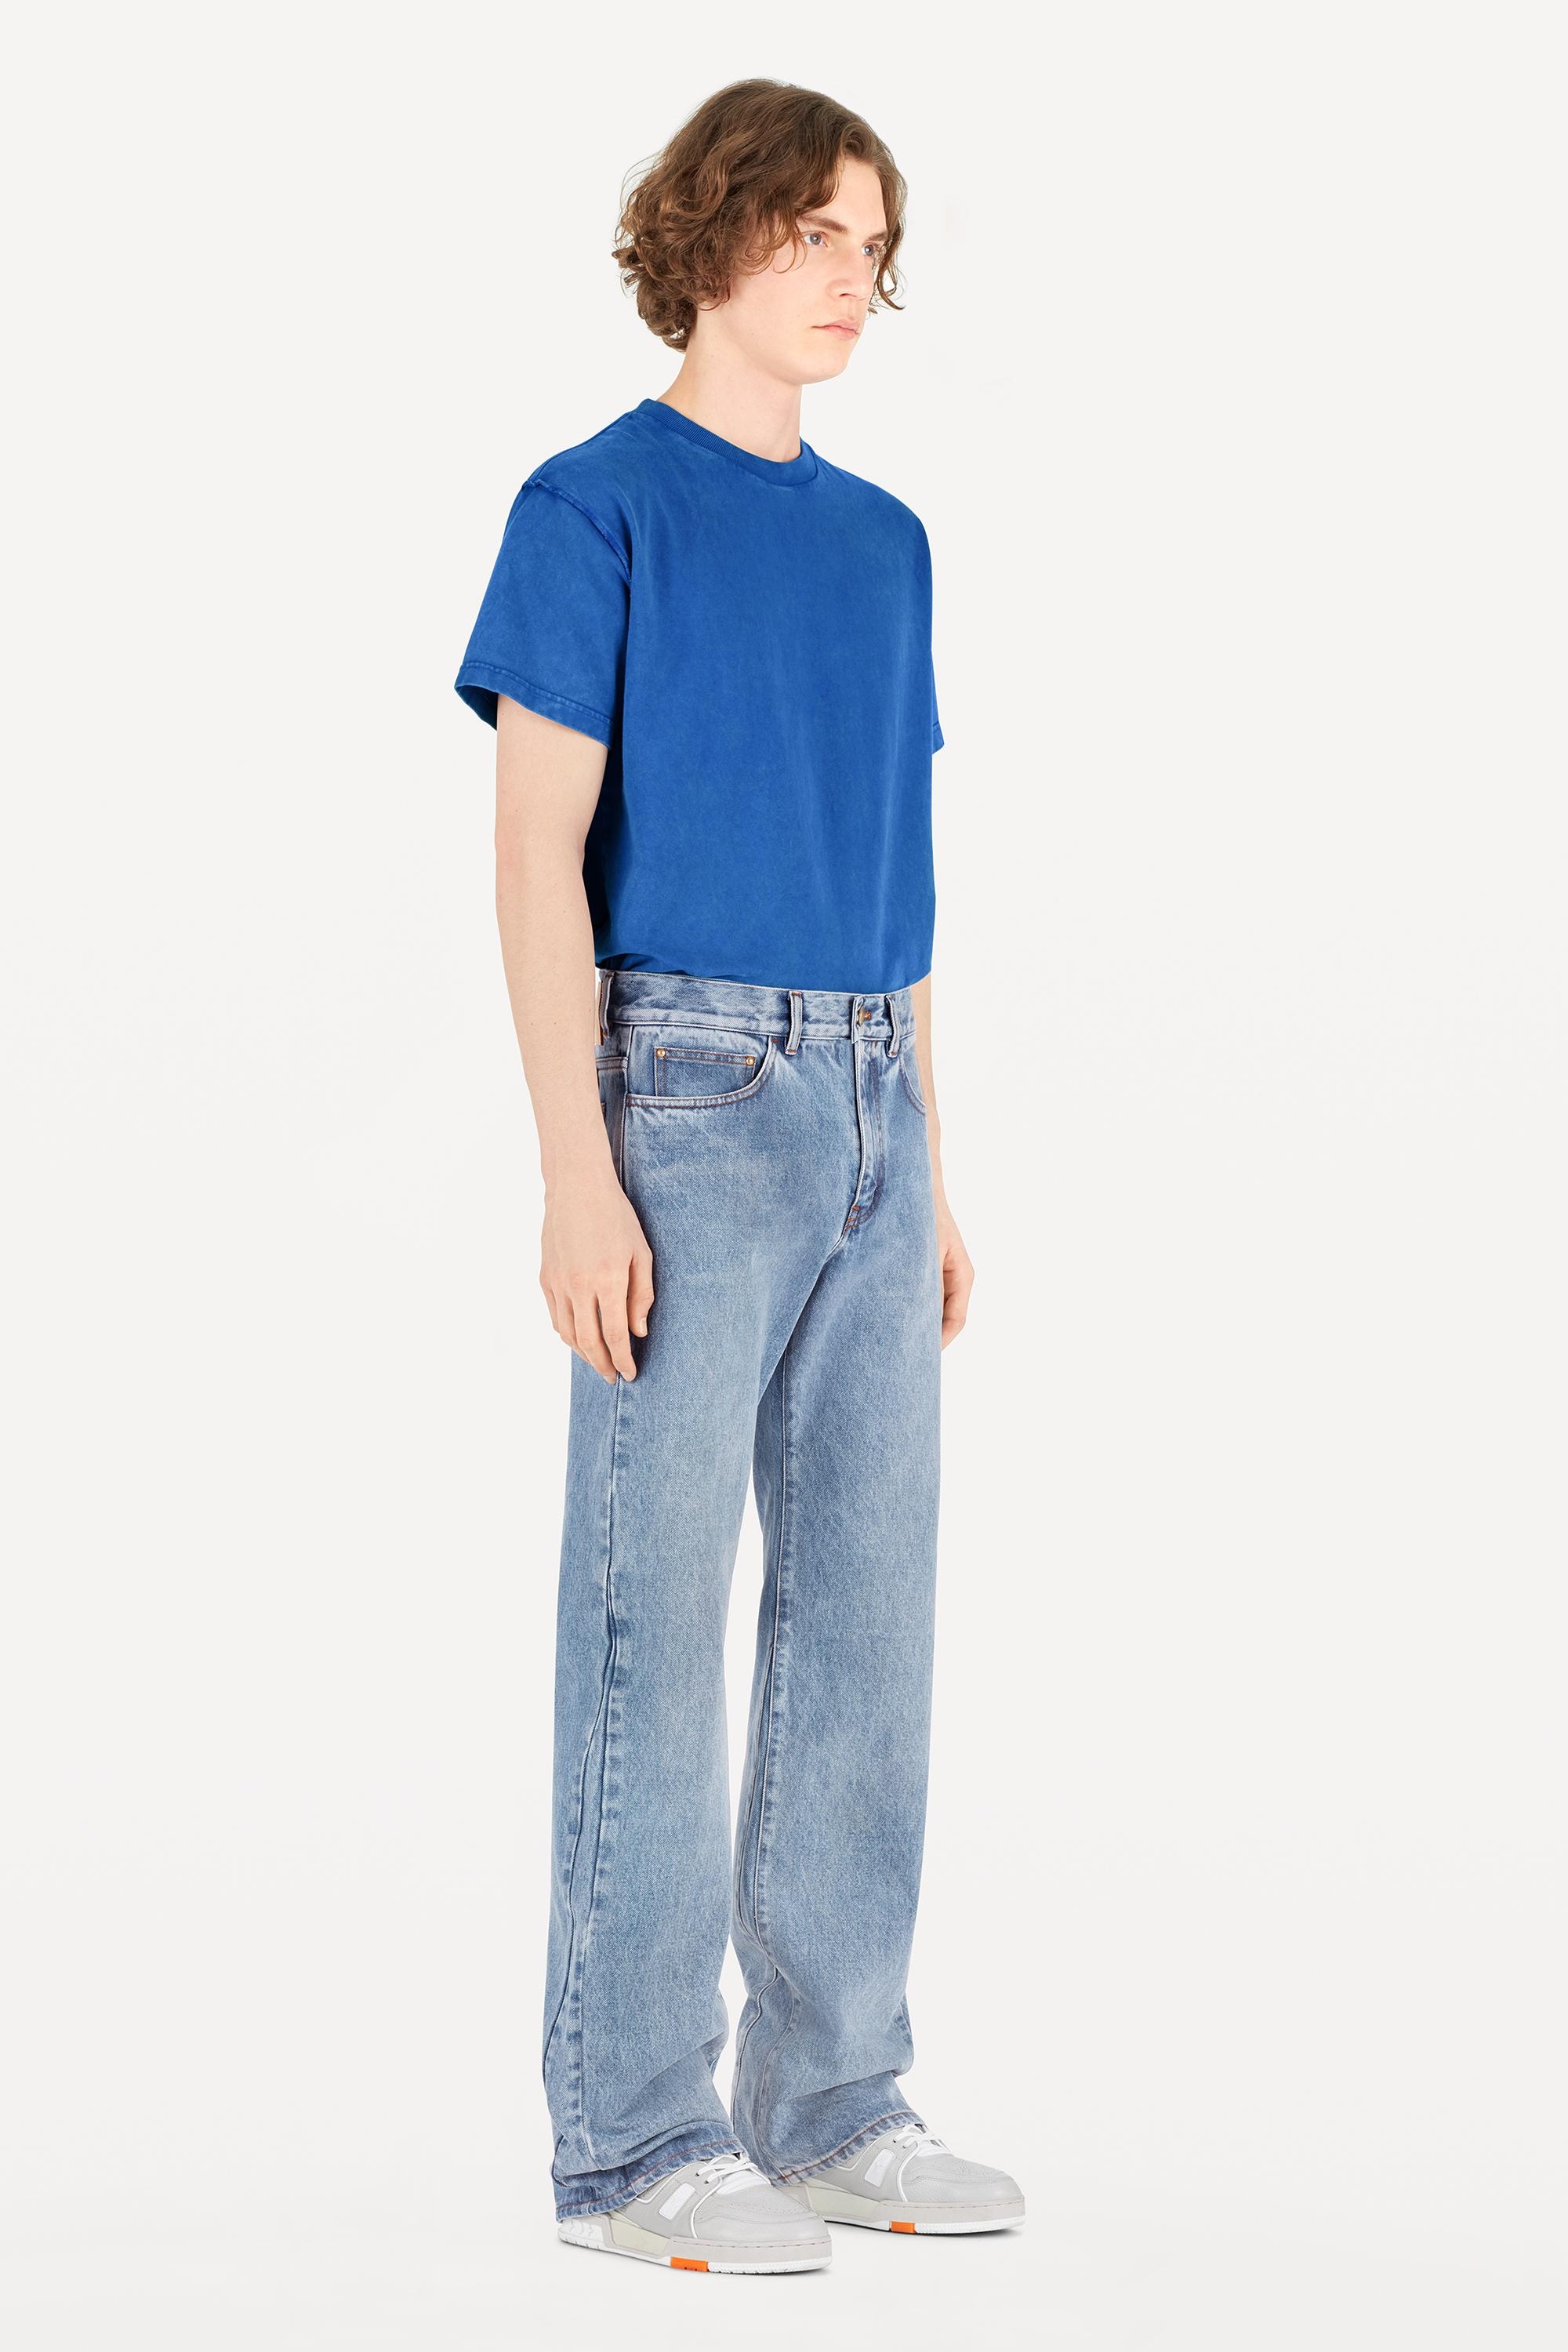 Louis Vuitton Distressed Baggy Monogram Jeans